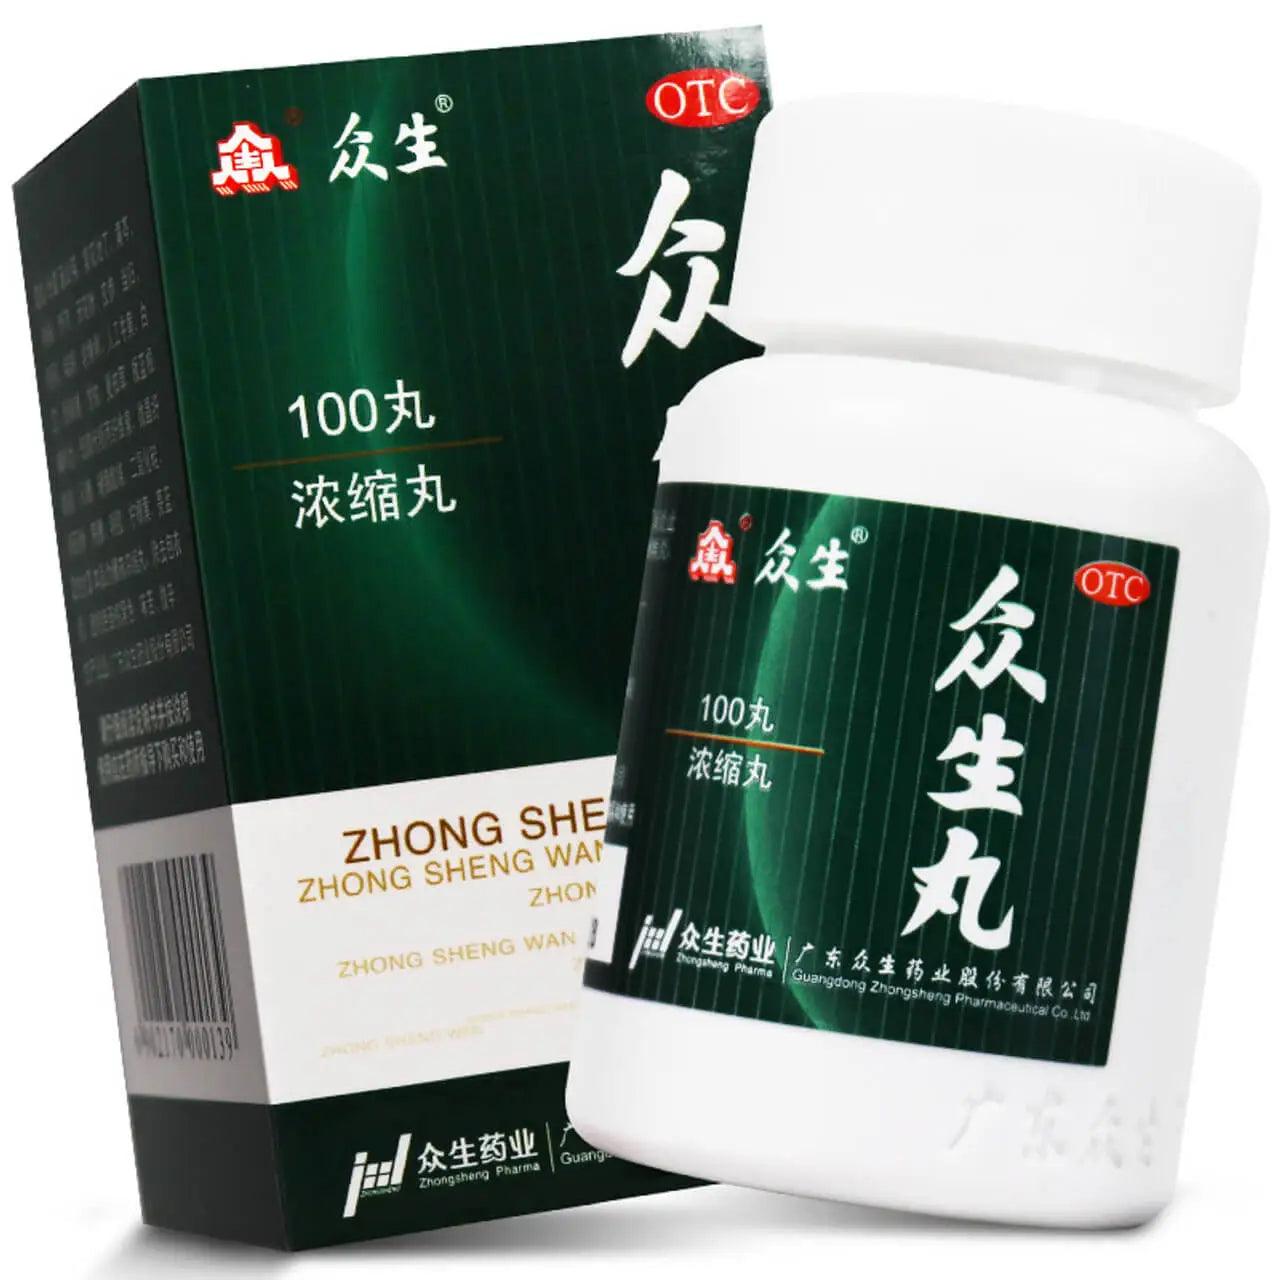 Zhong Sheng Wan (100 Pills) - Buy at New Green Nutrition